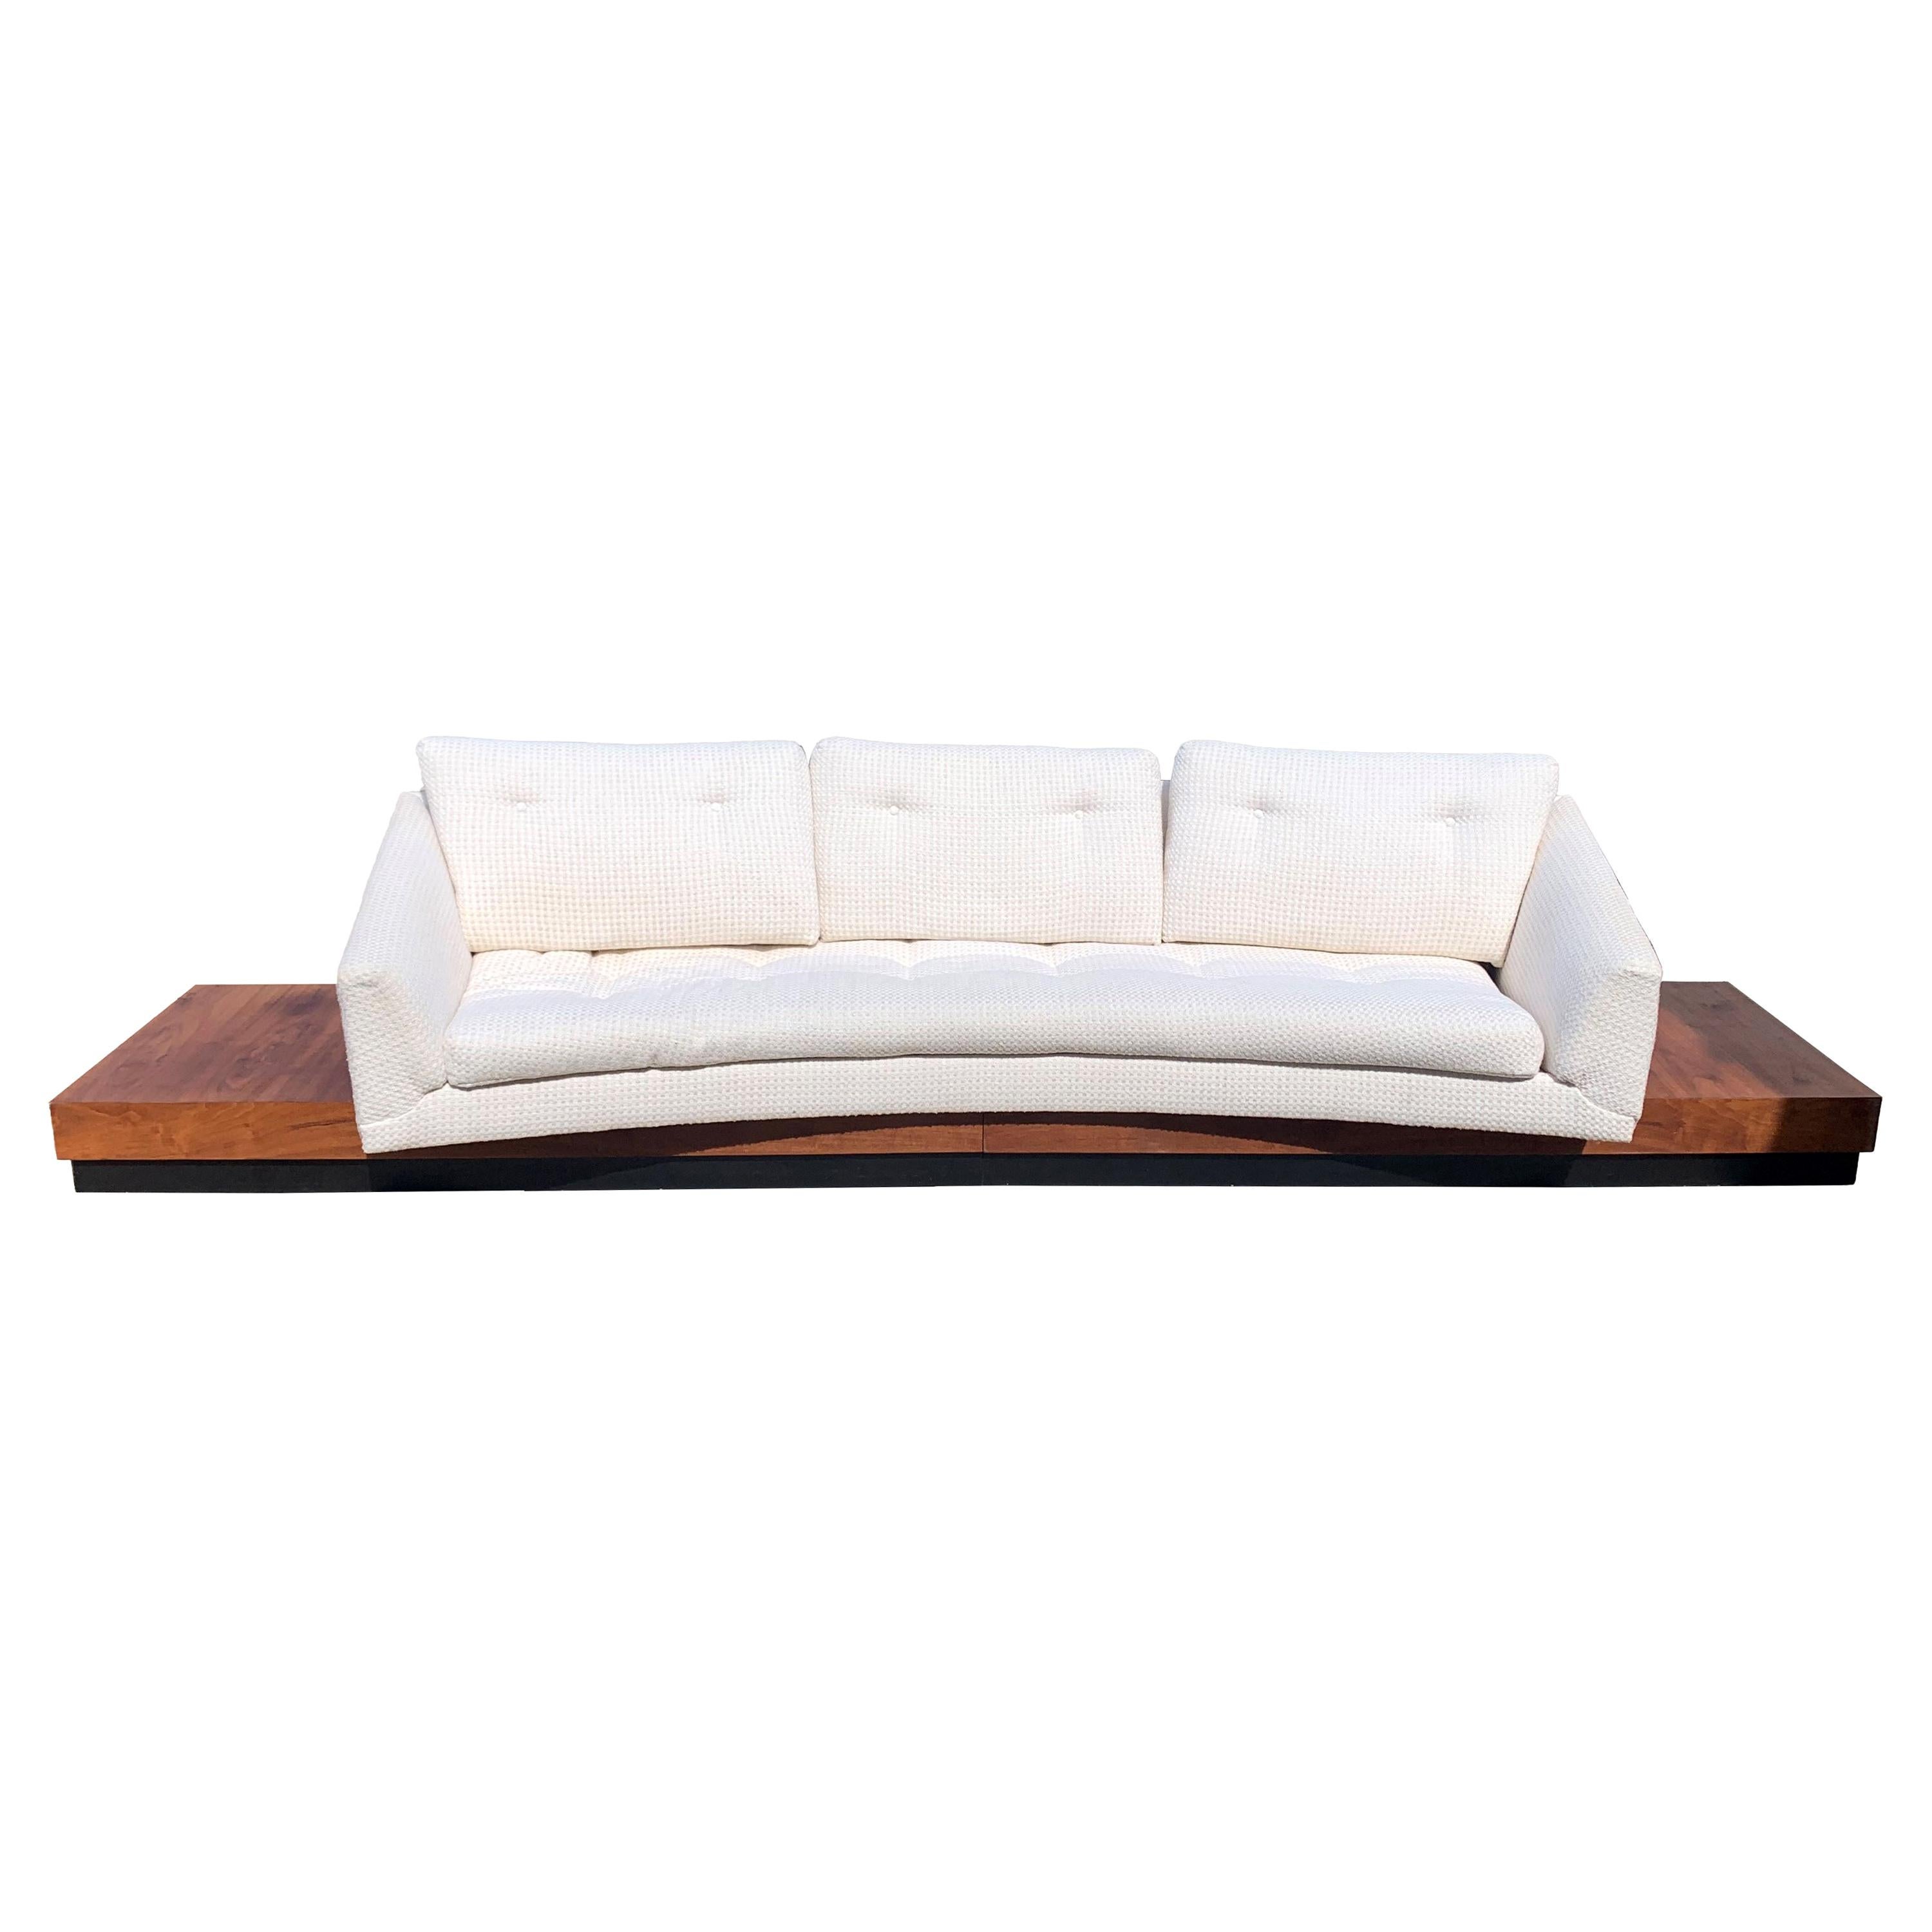 Iconic Mid-Century Modern Adrian Pearsall Platform Sofa on Walnut Base